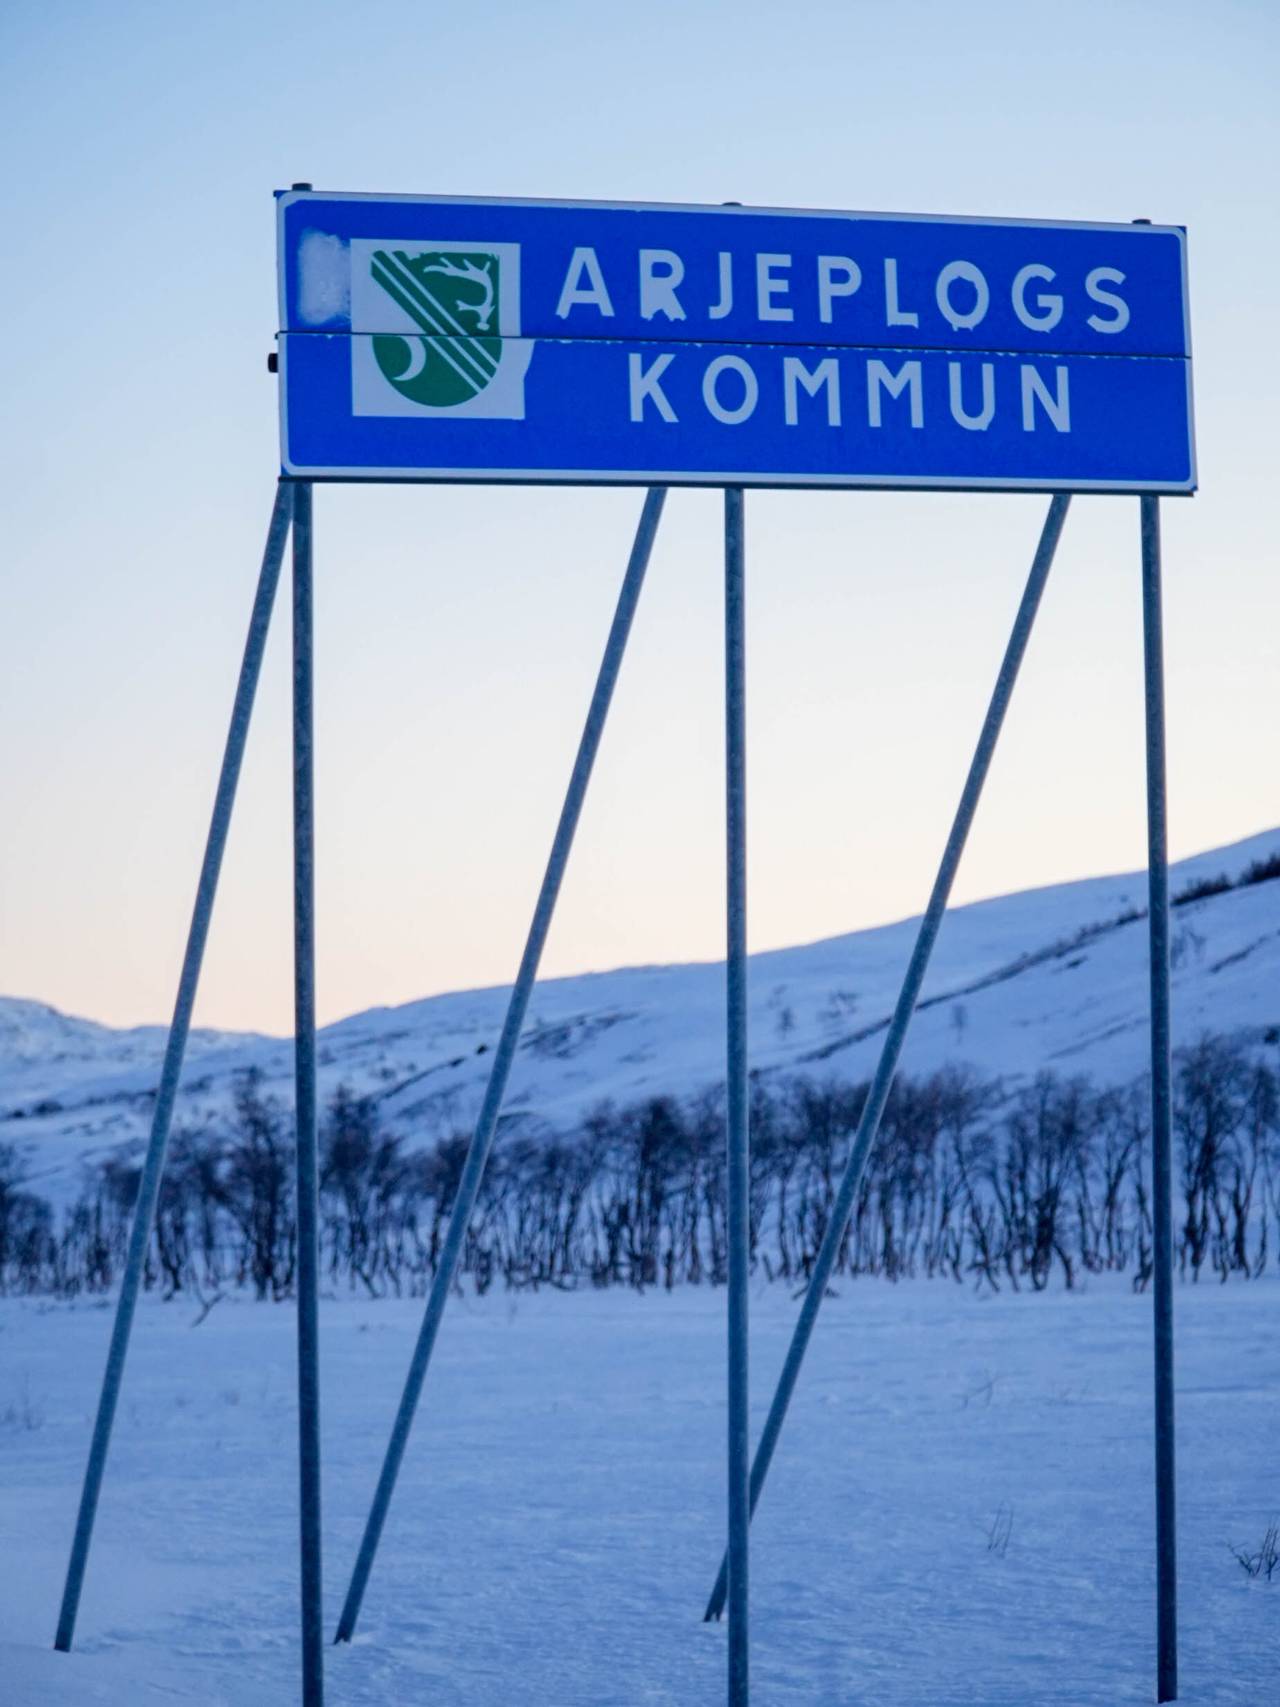 Arjeplog kommune. 